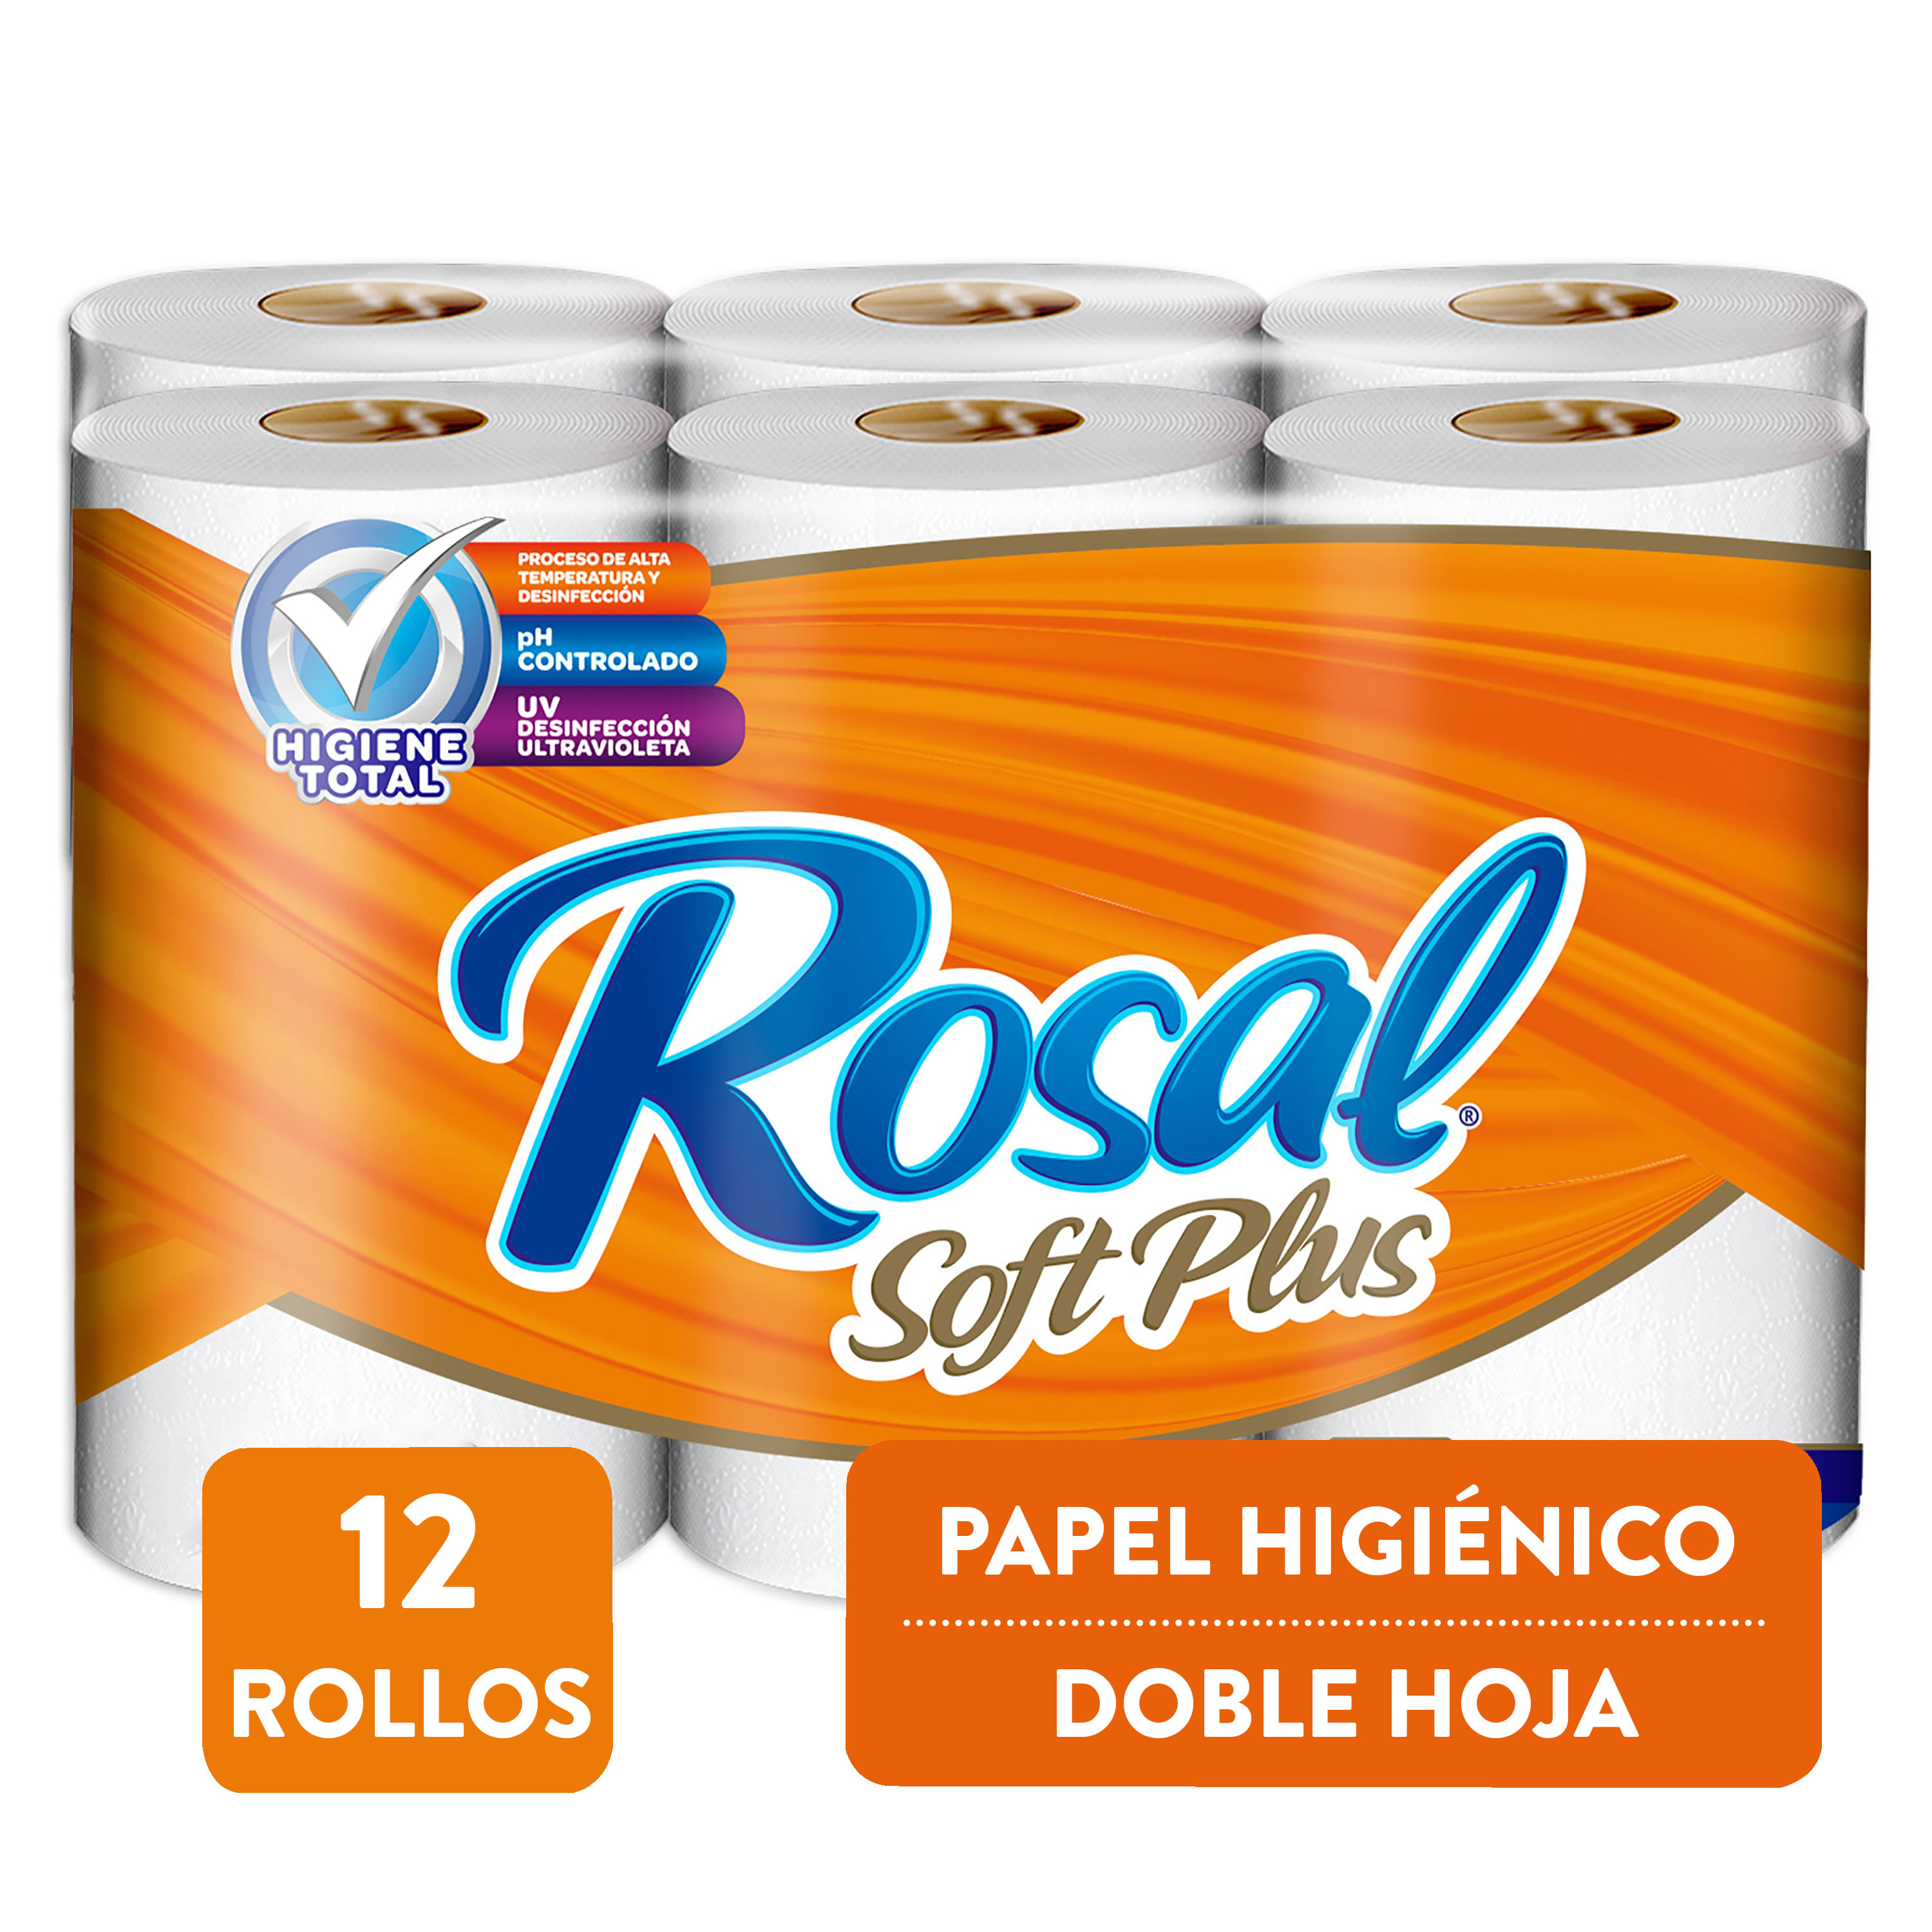 Comprar Papel Higiénico Rosal Naranja, Doble Hoja - 12Rollos